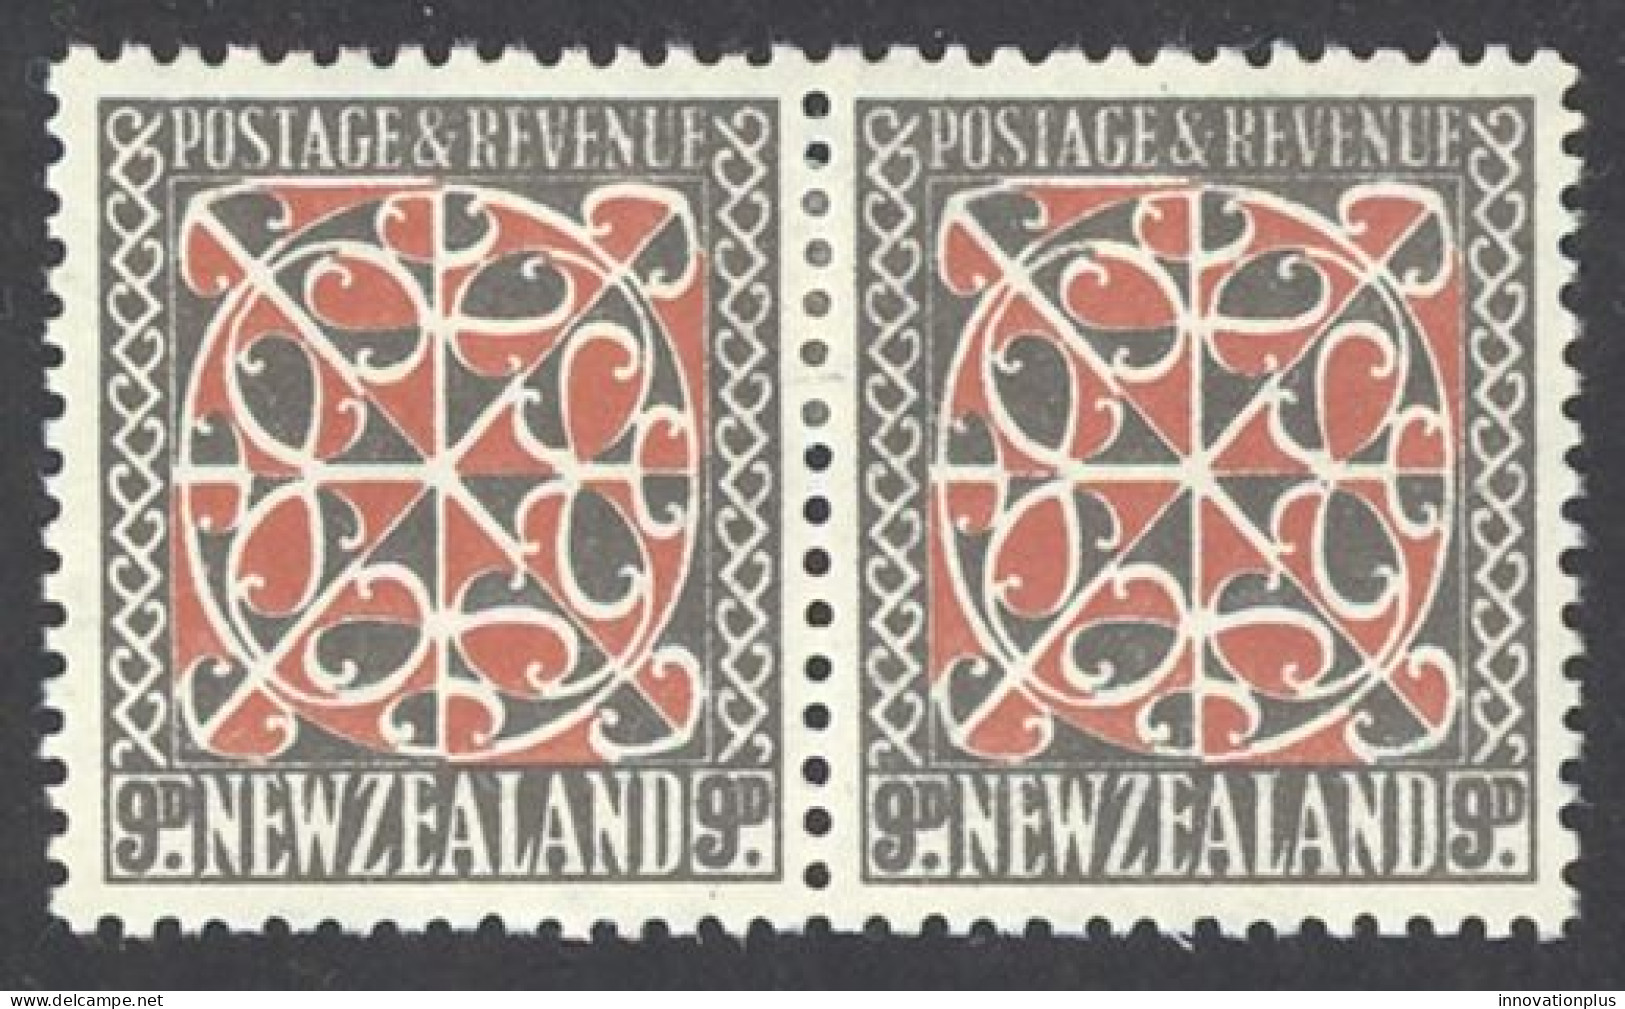 New Zealand Sc# 213 MH Pair 1936-1942 9p Maori Panel - Nuovi